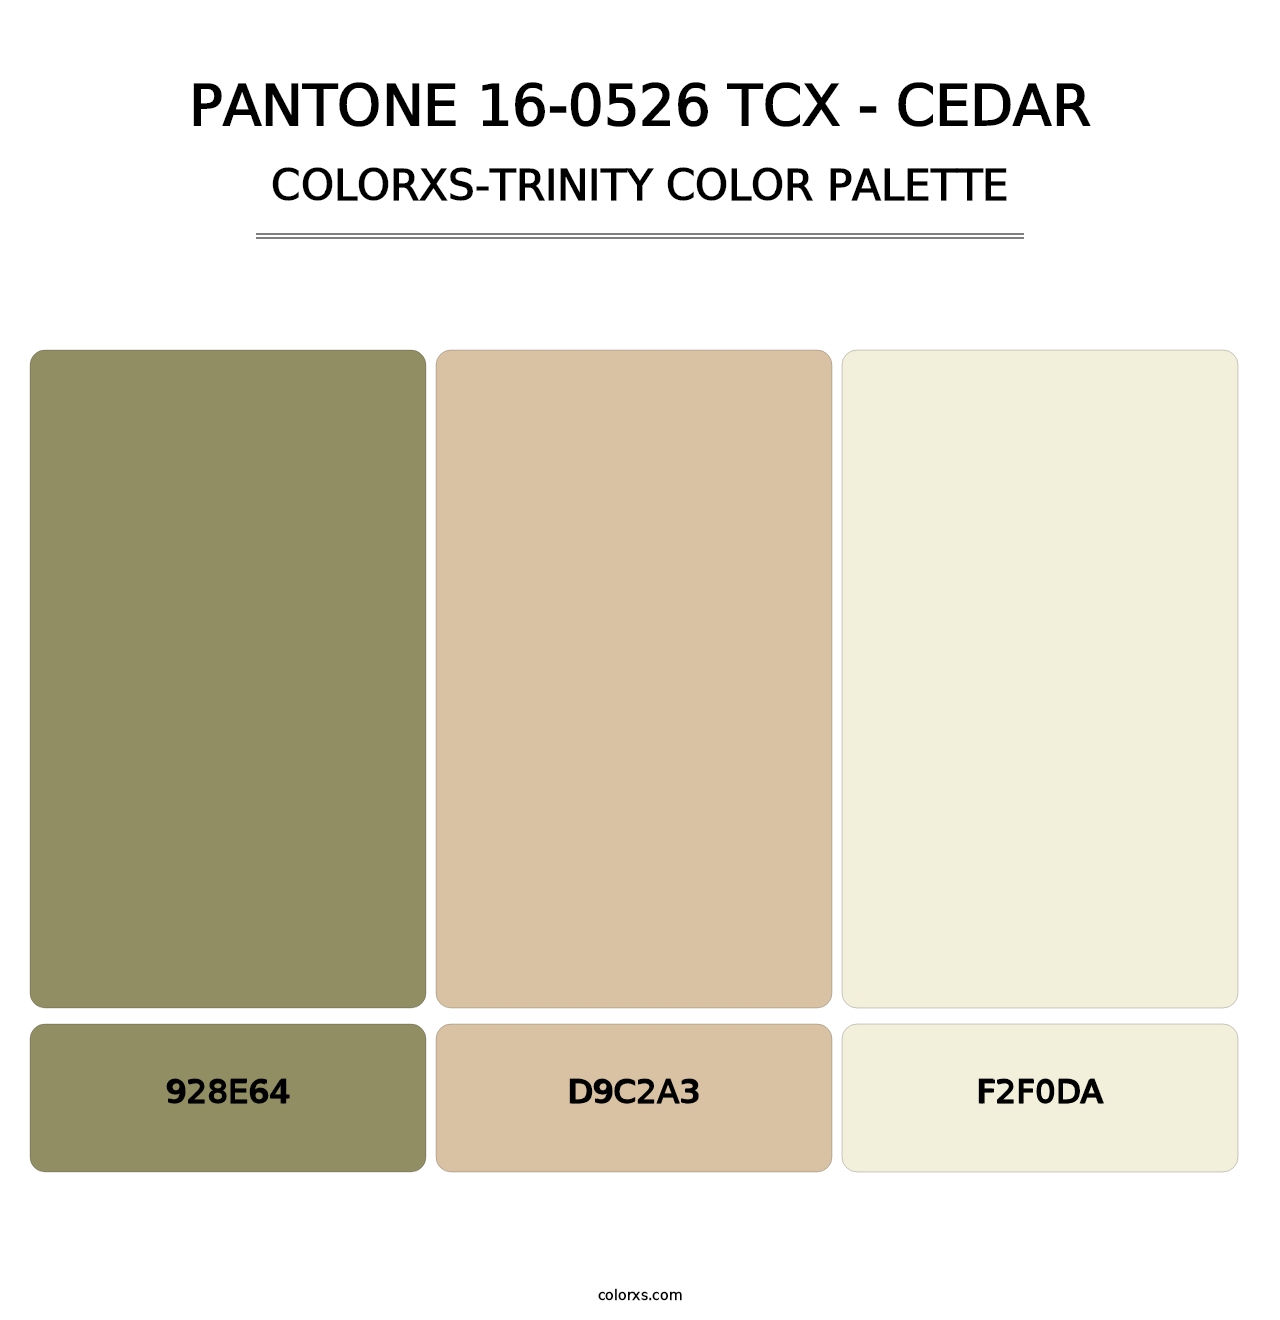 PANTONE 16-0526 TCX - Cedar - Colorxs Trinity Palette